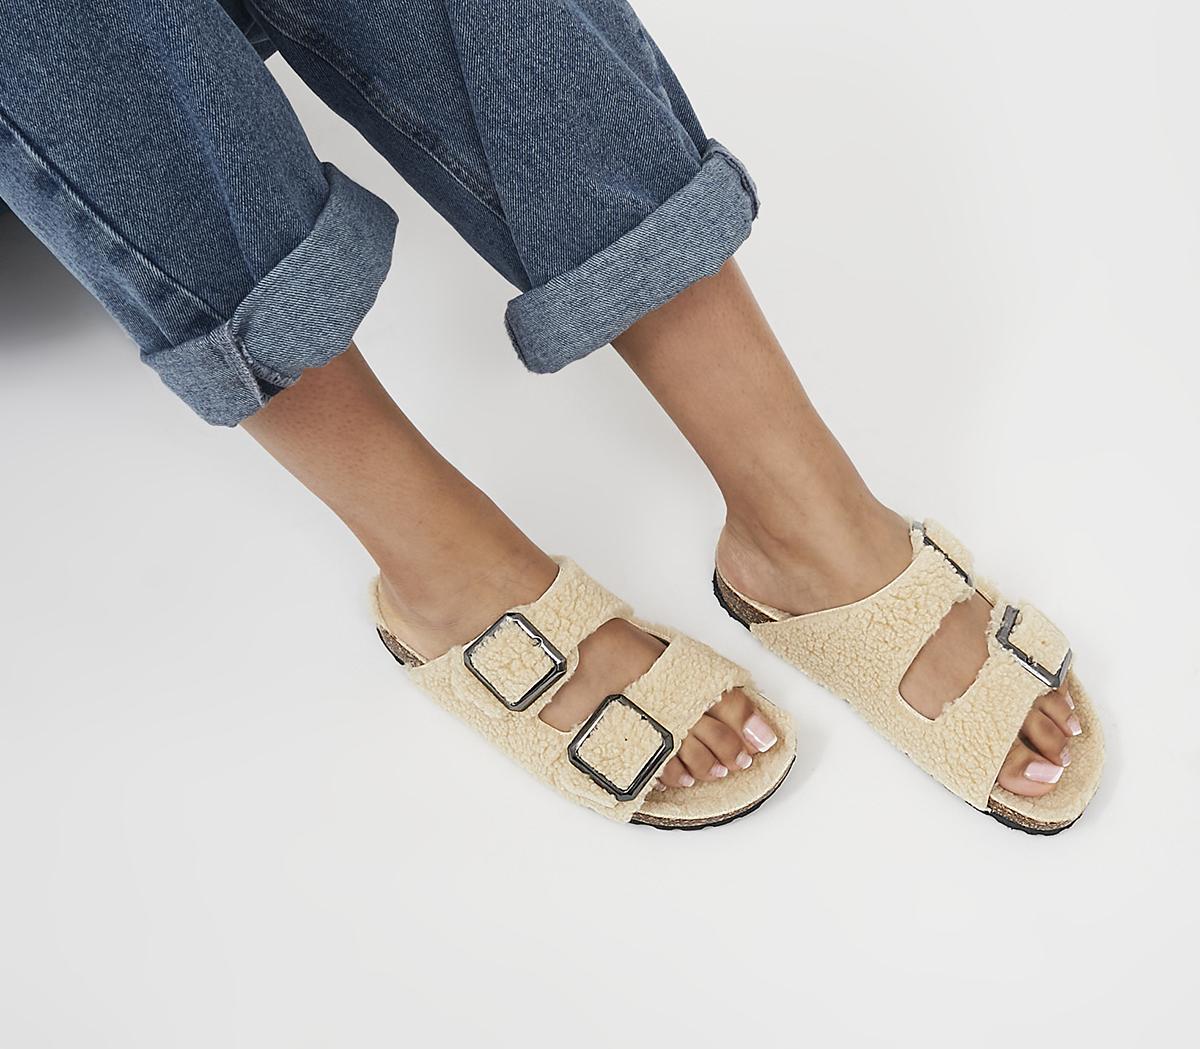 Buy Catwalk Women's Metallic Two Strap Sandals - 4 UK/India (36 EU)  (3298RX-4) at Amazon.in